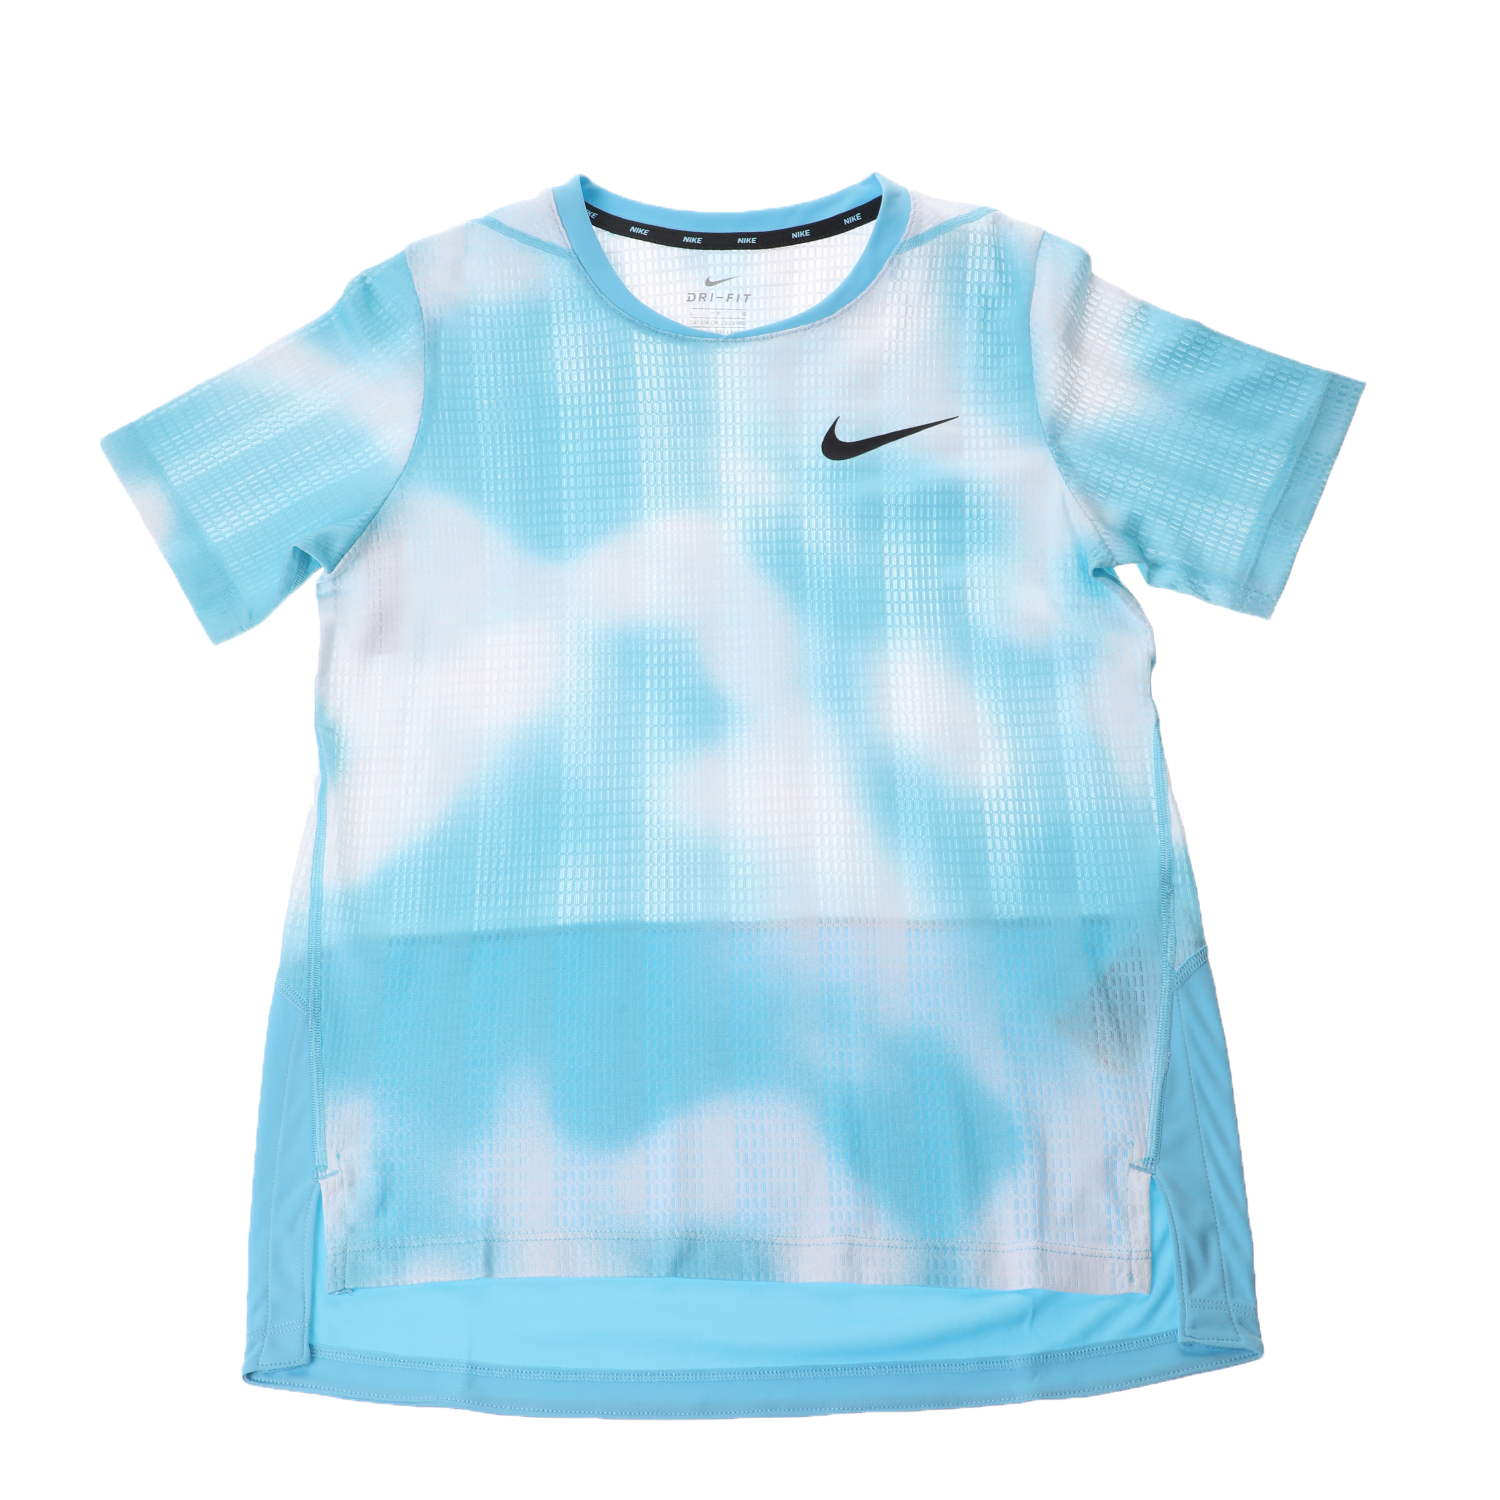 NIKE - Παιδικό t-shirt Nike Dri-FIT μπλε Παιδικά/Boys/Ρούχα/Αθλητικά